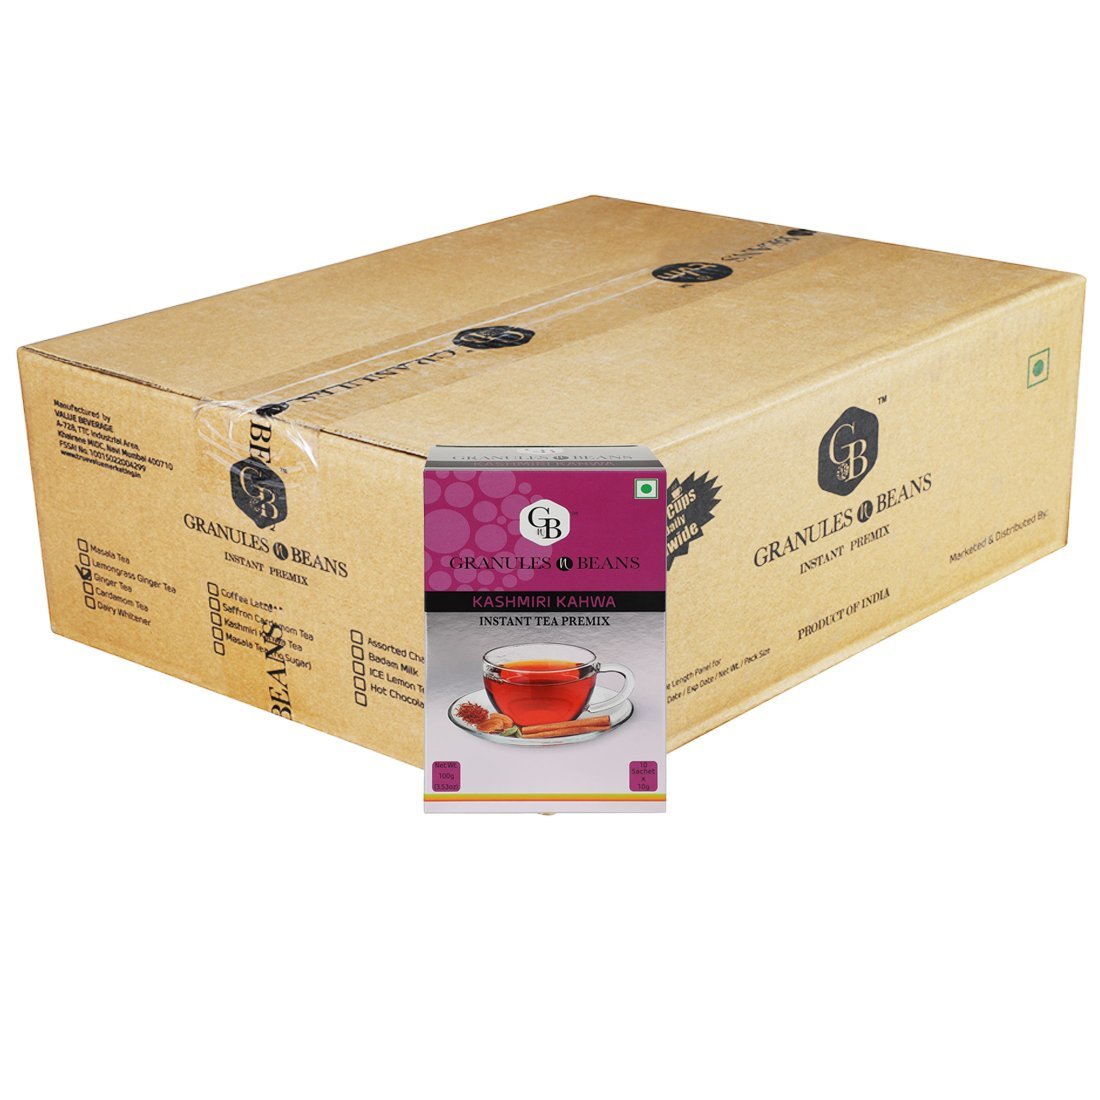 Granules n Beans Kashmiri Kahwa Instant Tea Premix - (10 Sachet x 10g = 100g) - (Pack of 16)